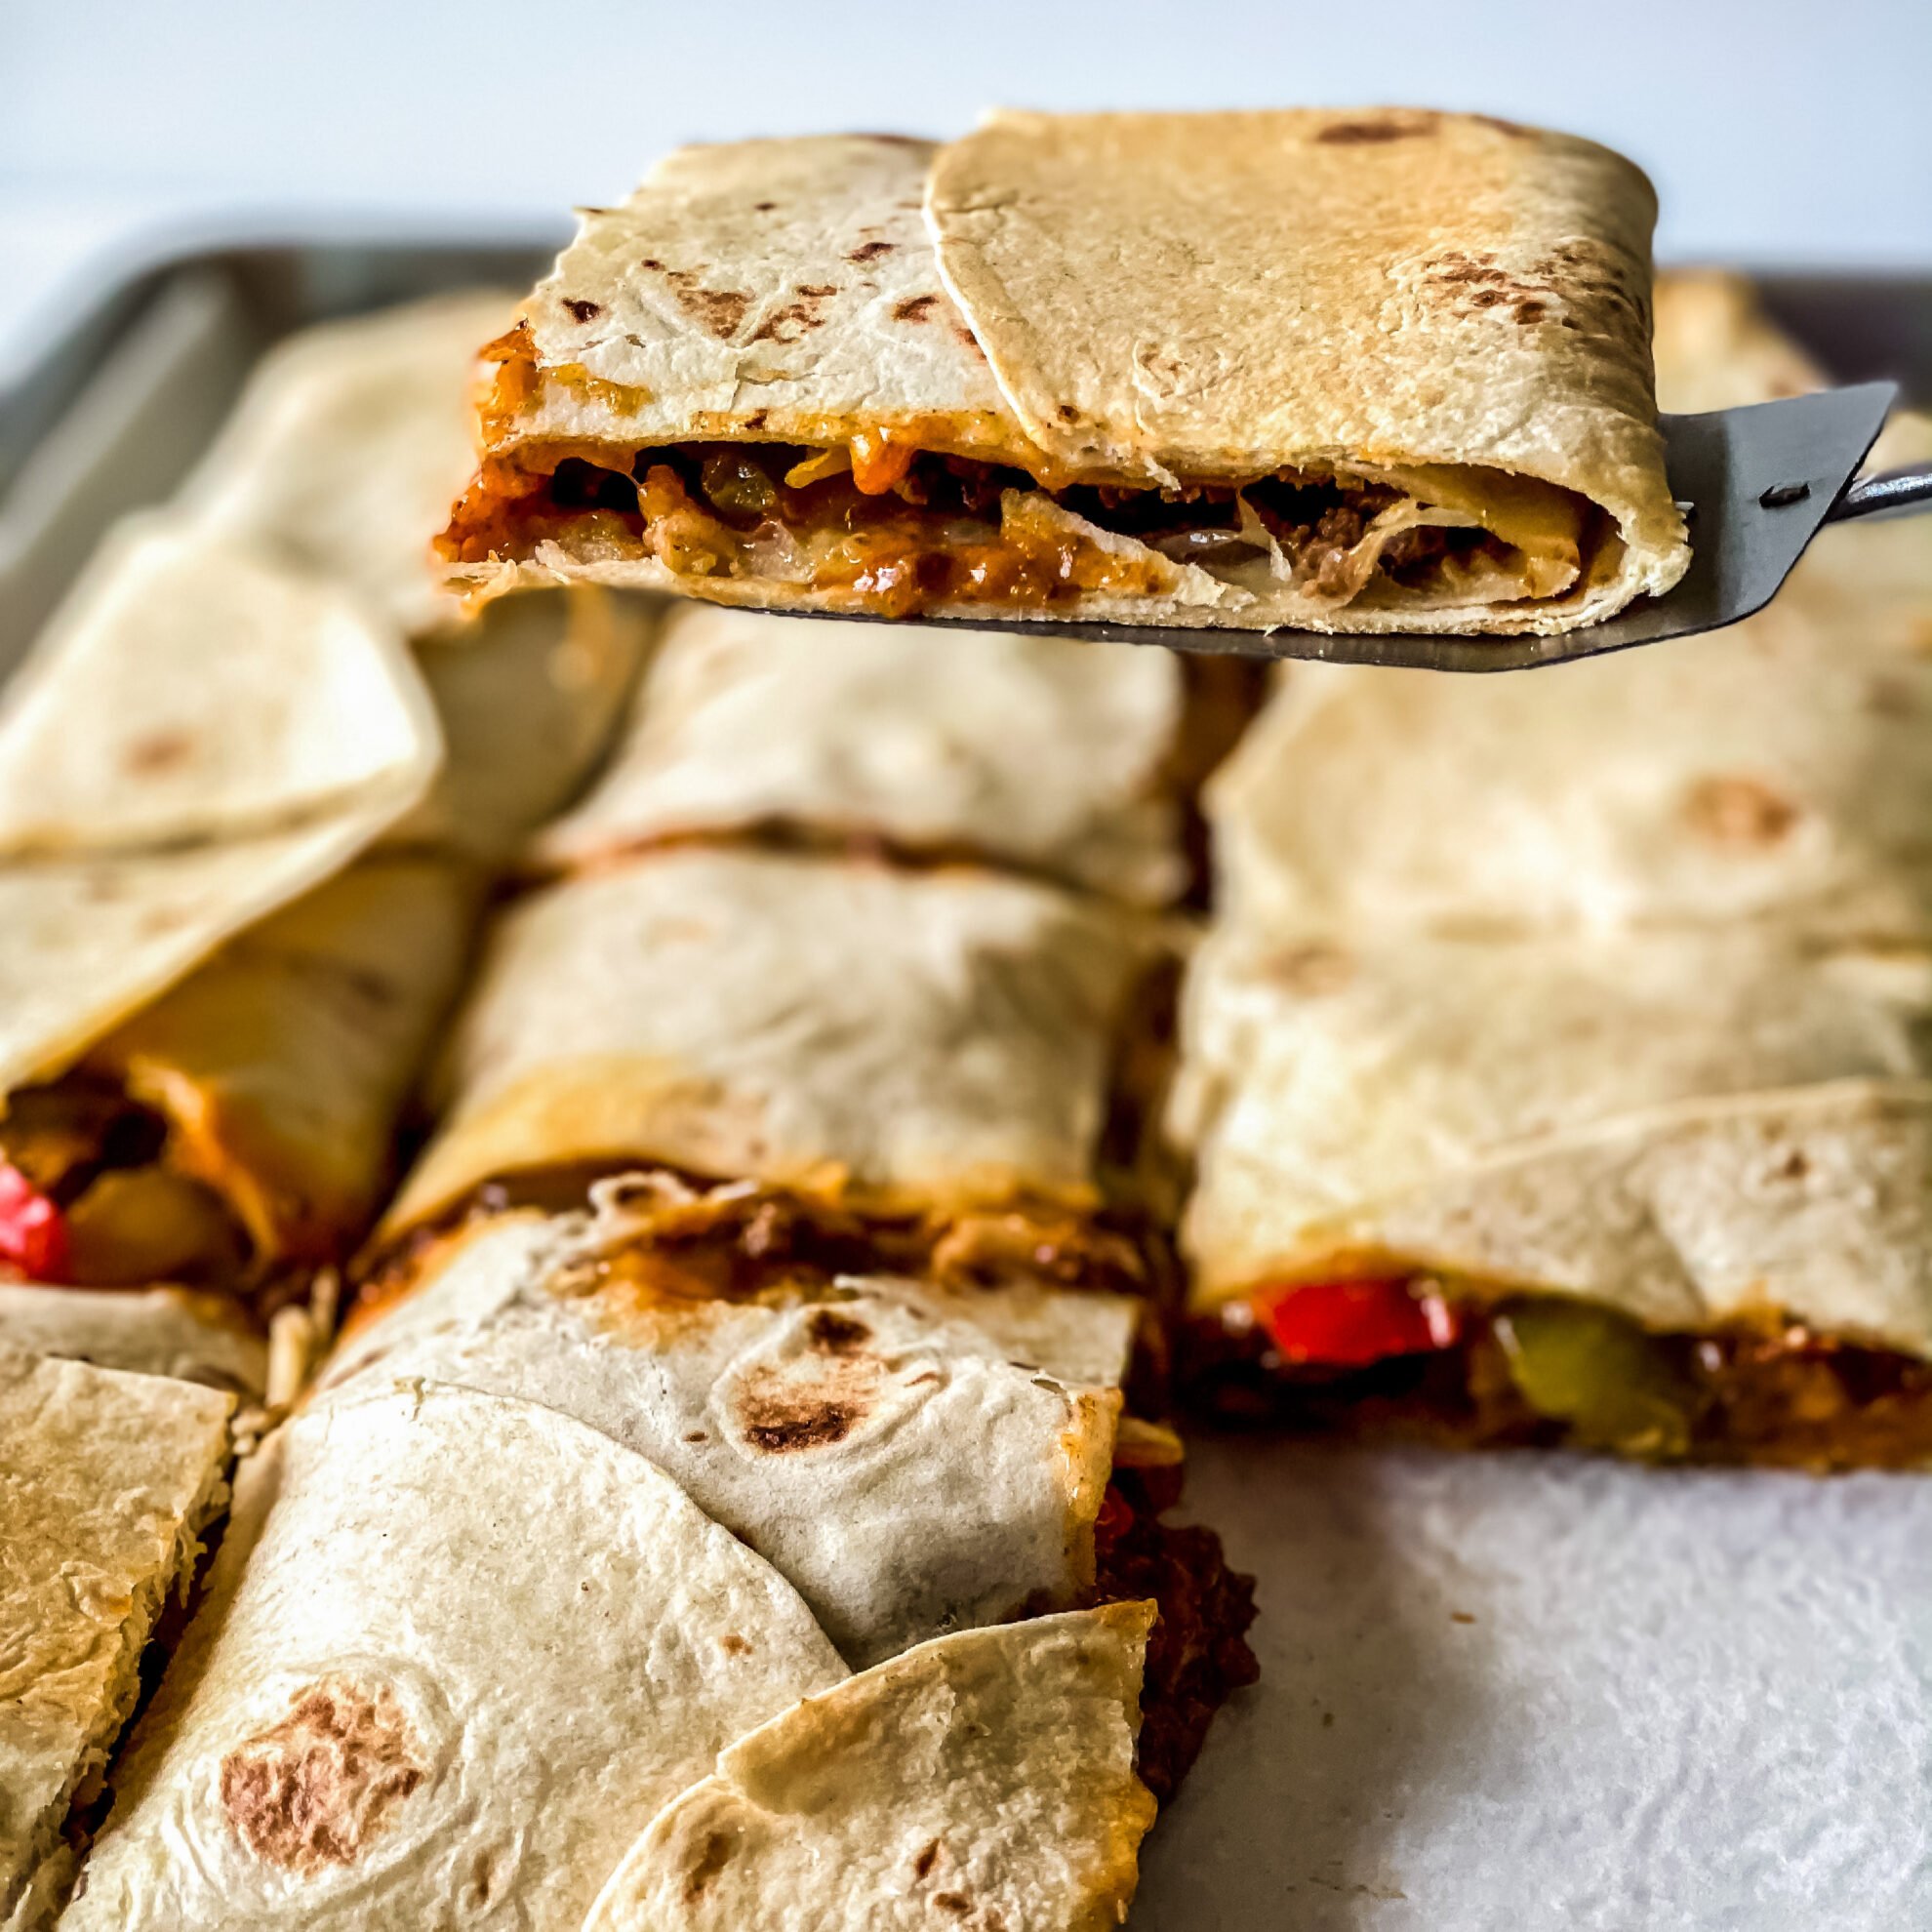 Easy Sheet Pan Quesadillas Recipe - Delicious Family Dinner! - Thrifty Jinxy